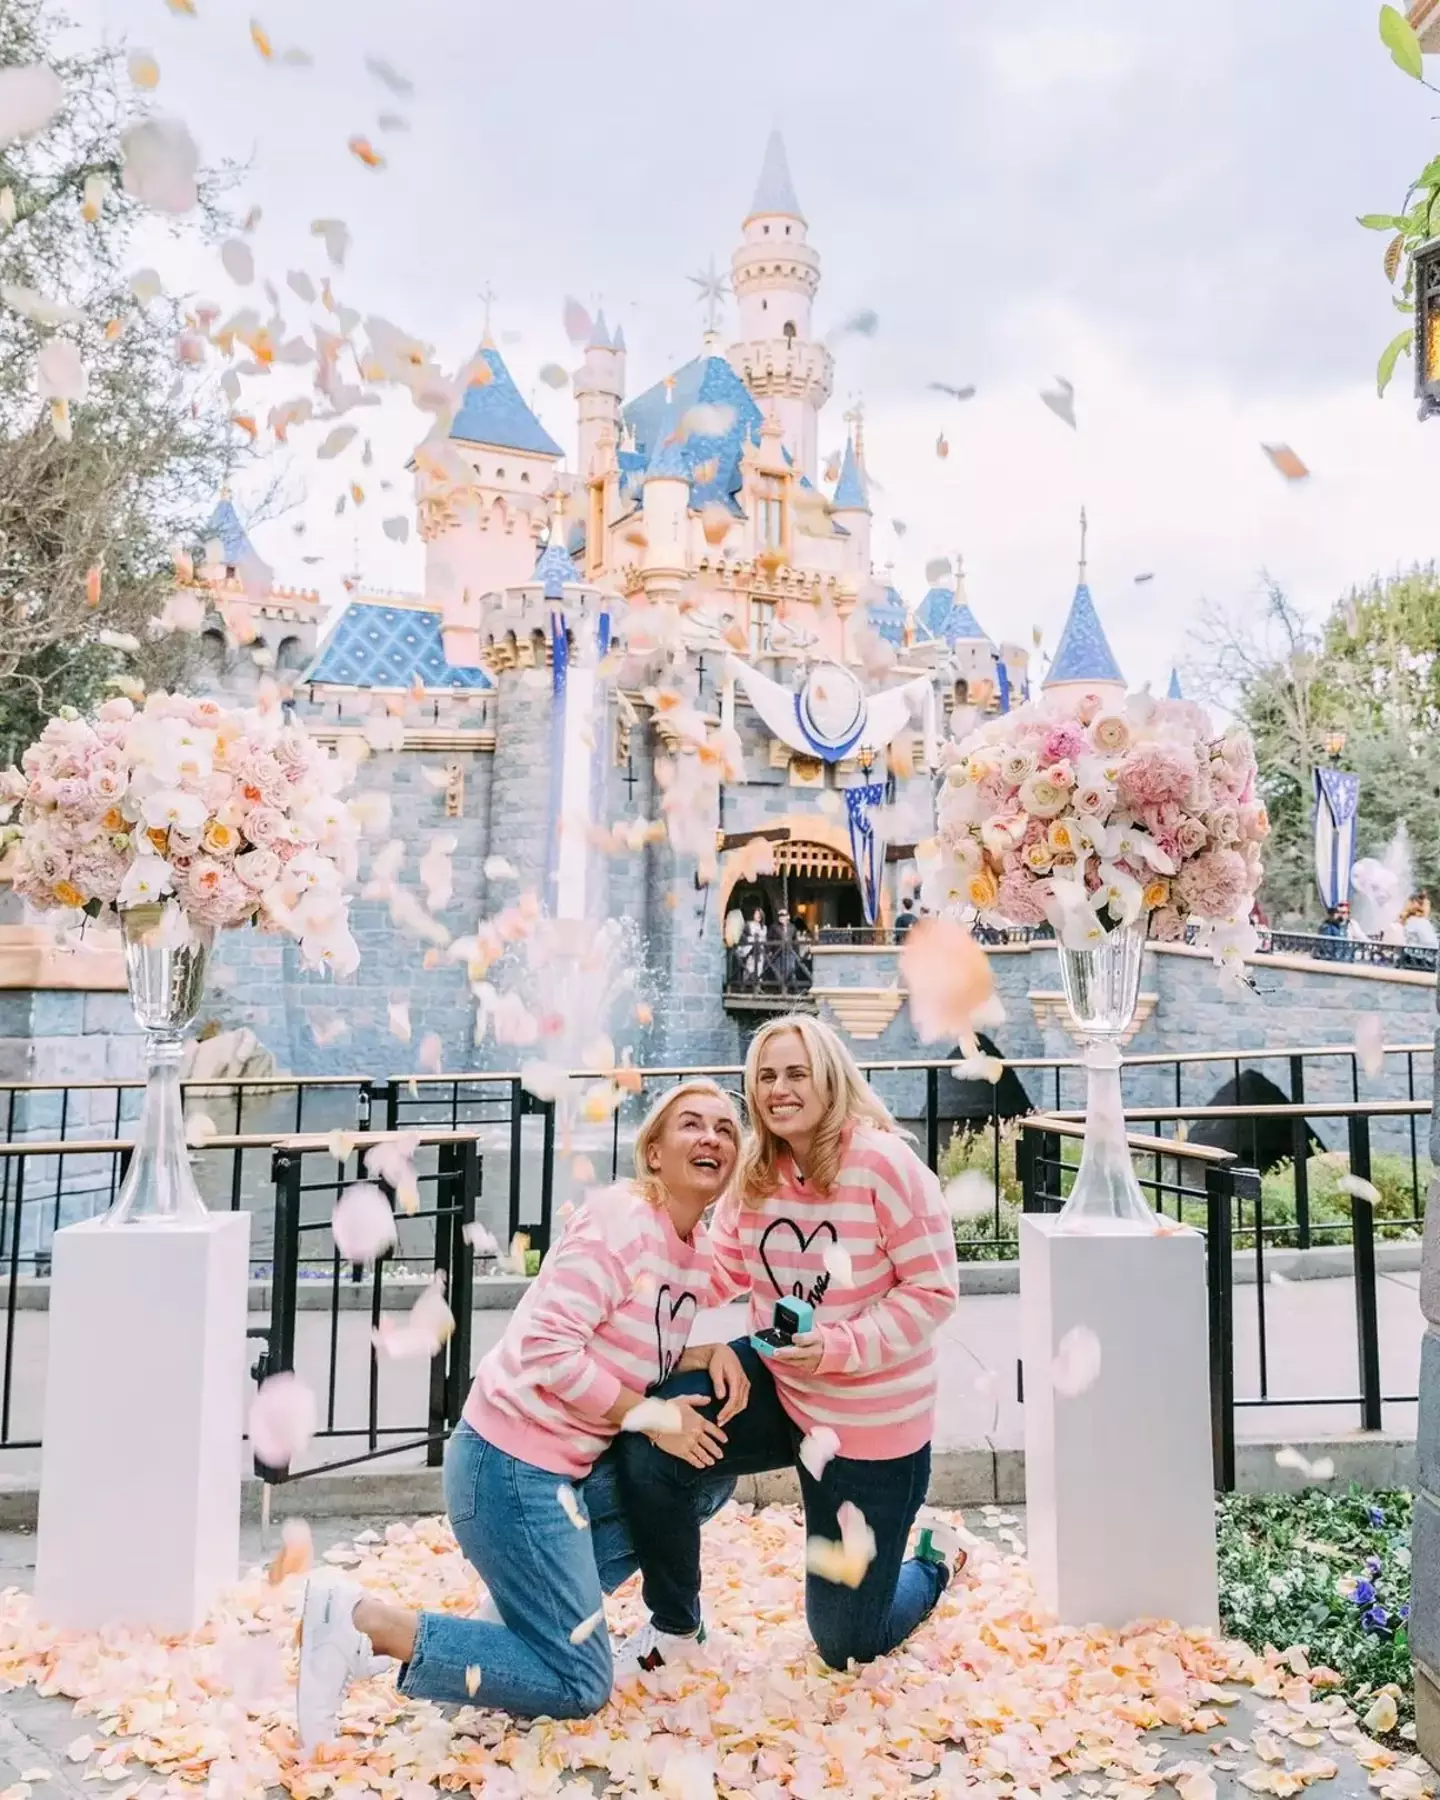 Rebel Wilson and her girlfriend got engaged at Disneyland.